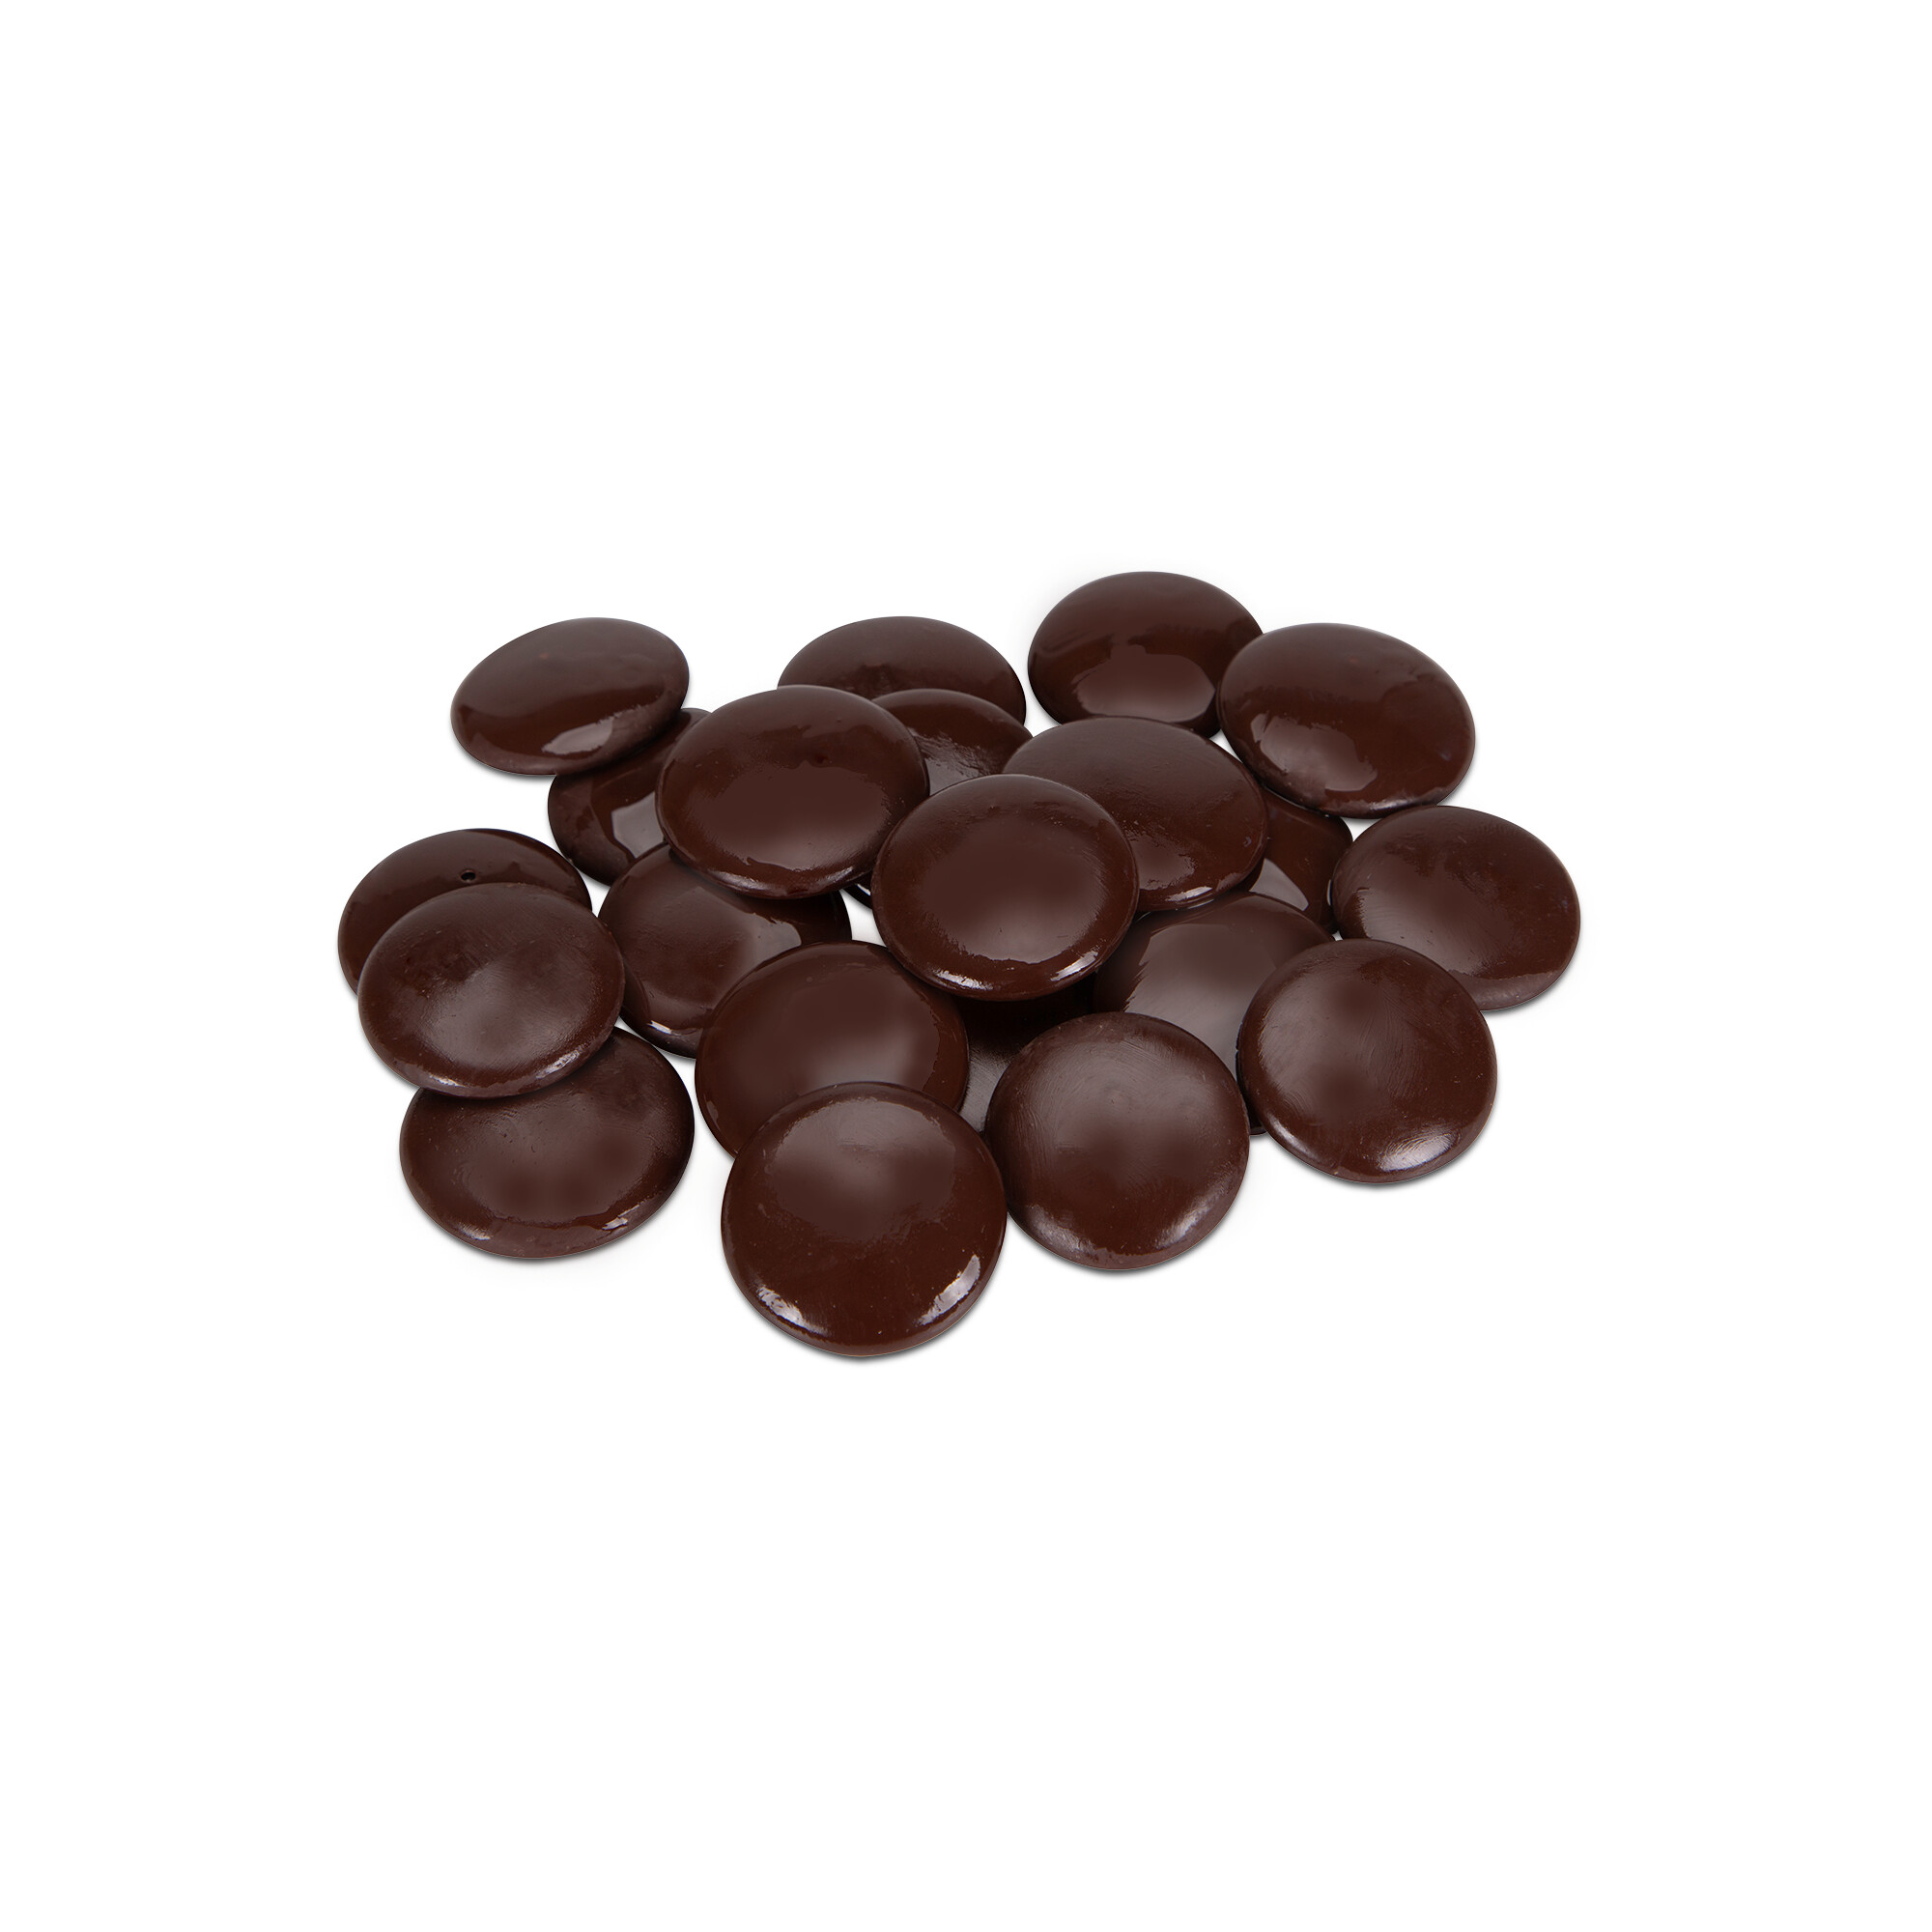 Kuvertüre – Edelbitter-Schokolade – Drops